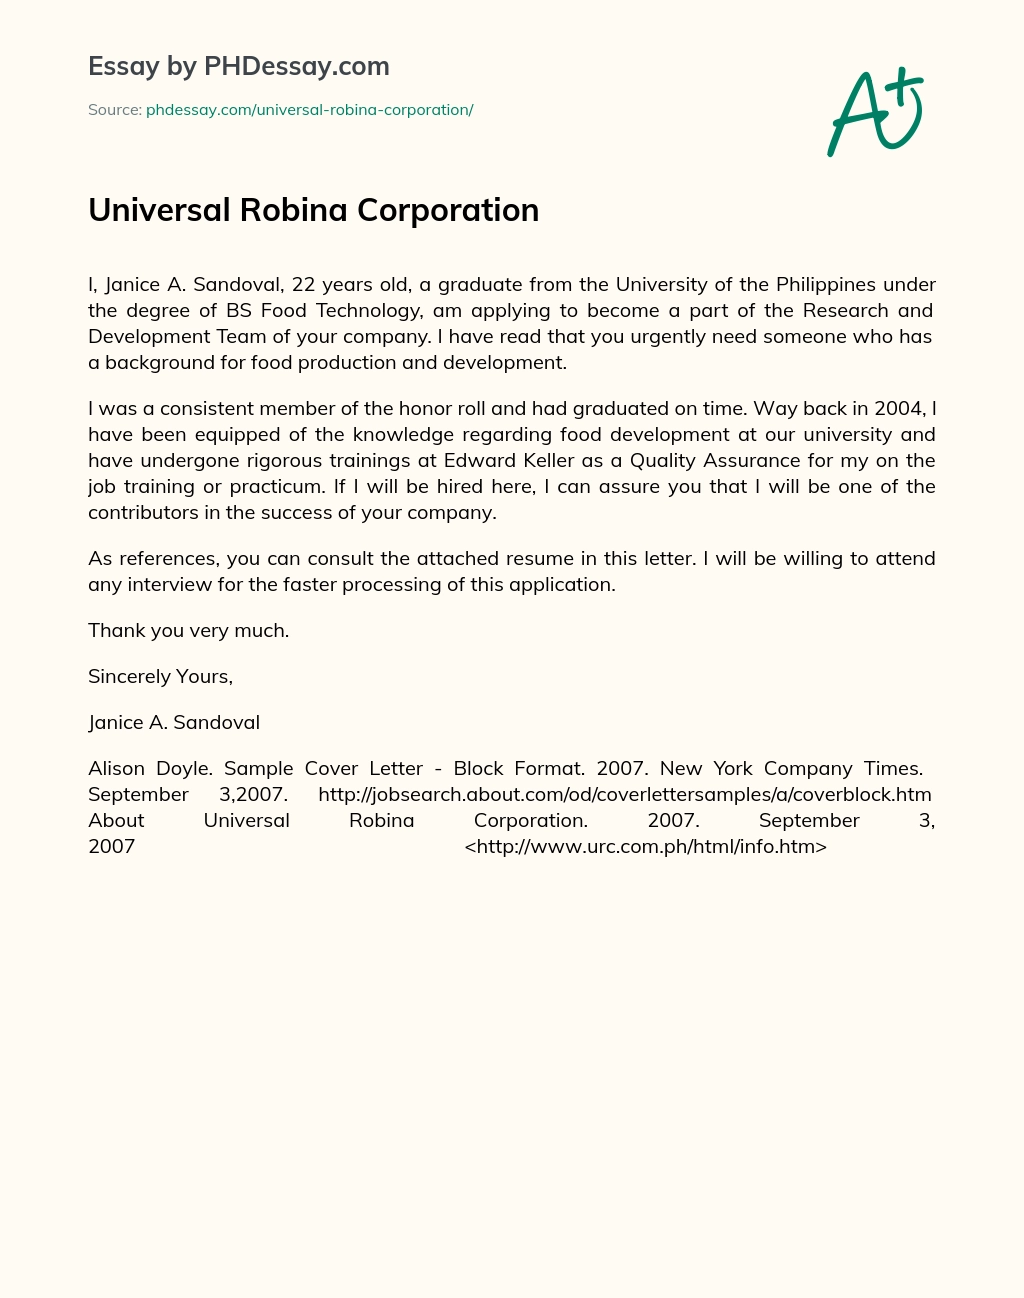 Universal Robina Corporation essay